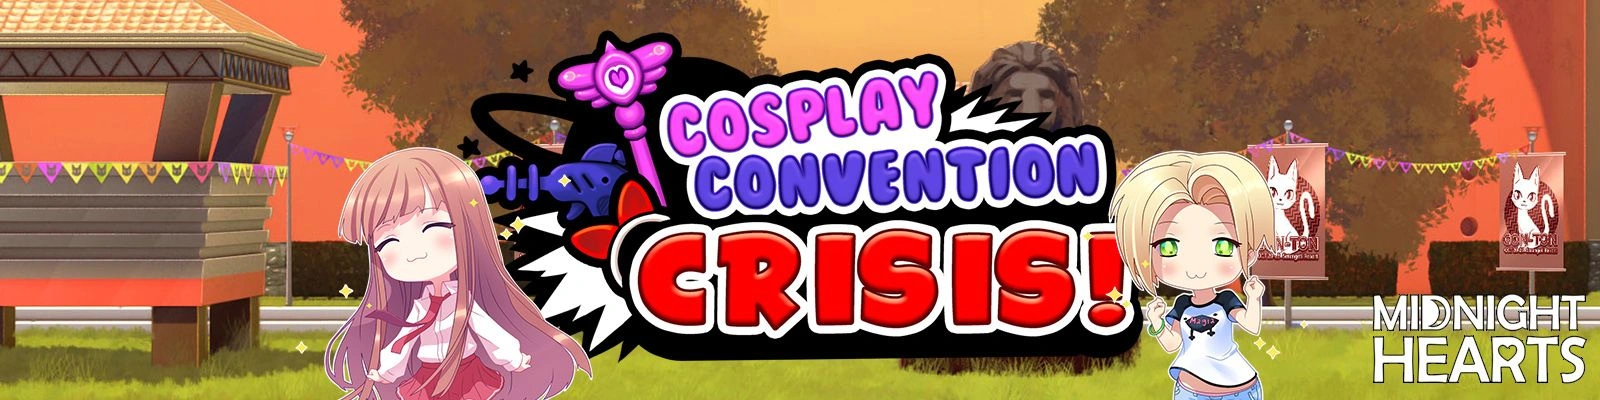 Cosplay Convention Crisis [v0.2.6.2] main image